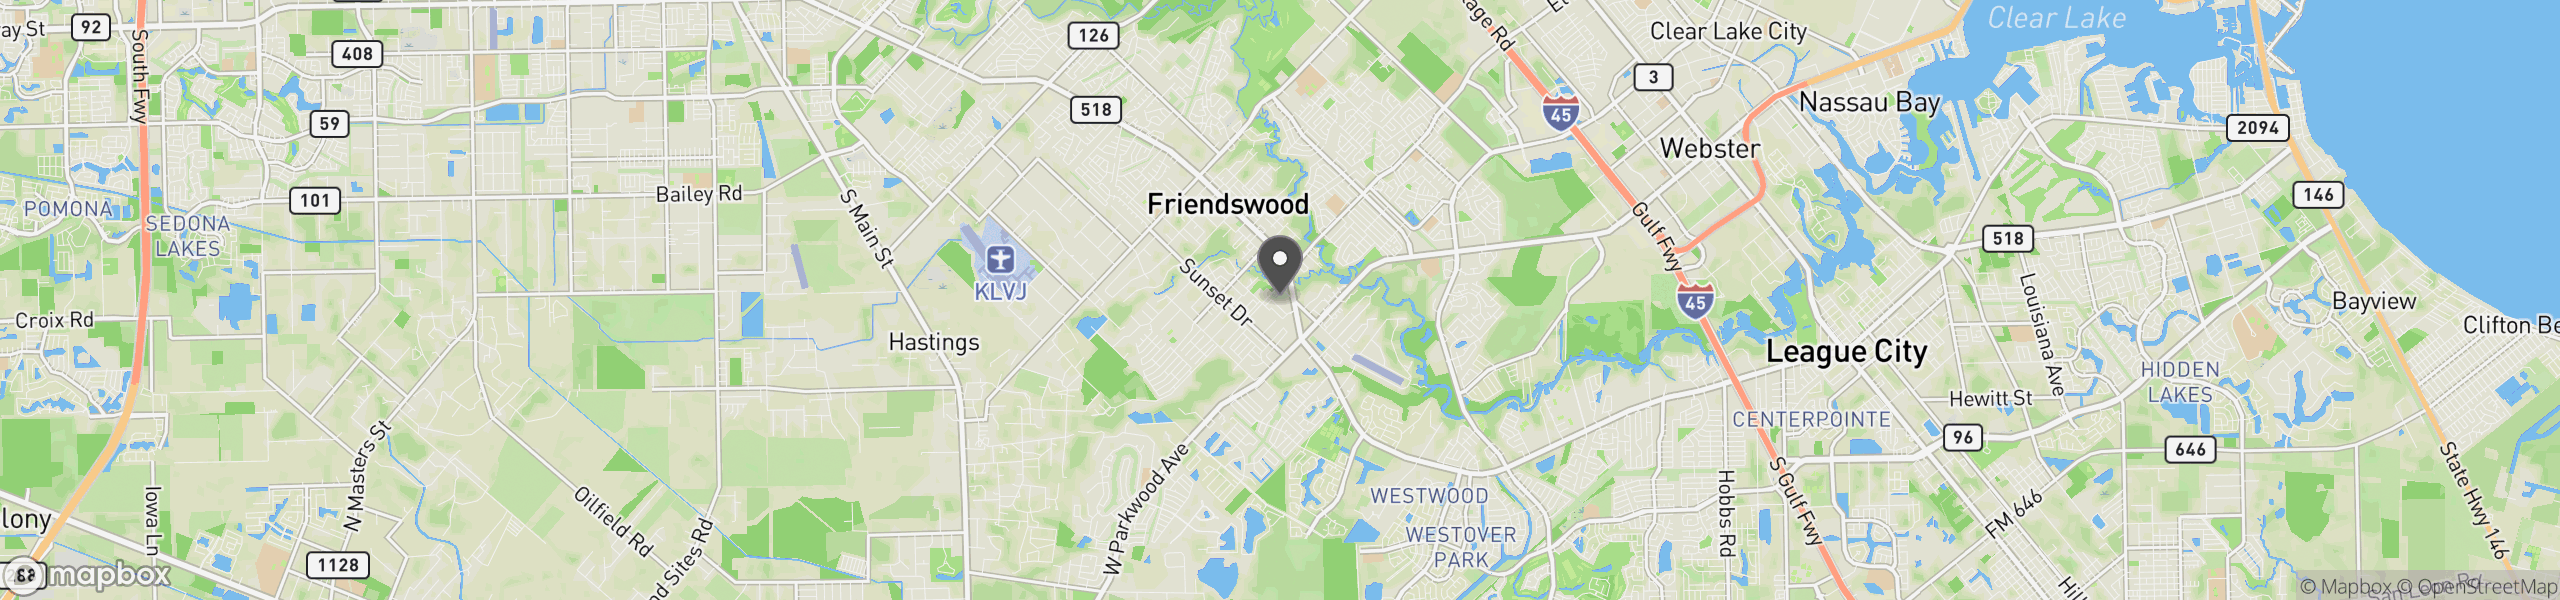 Friendswood, TX 77546